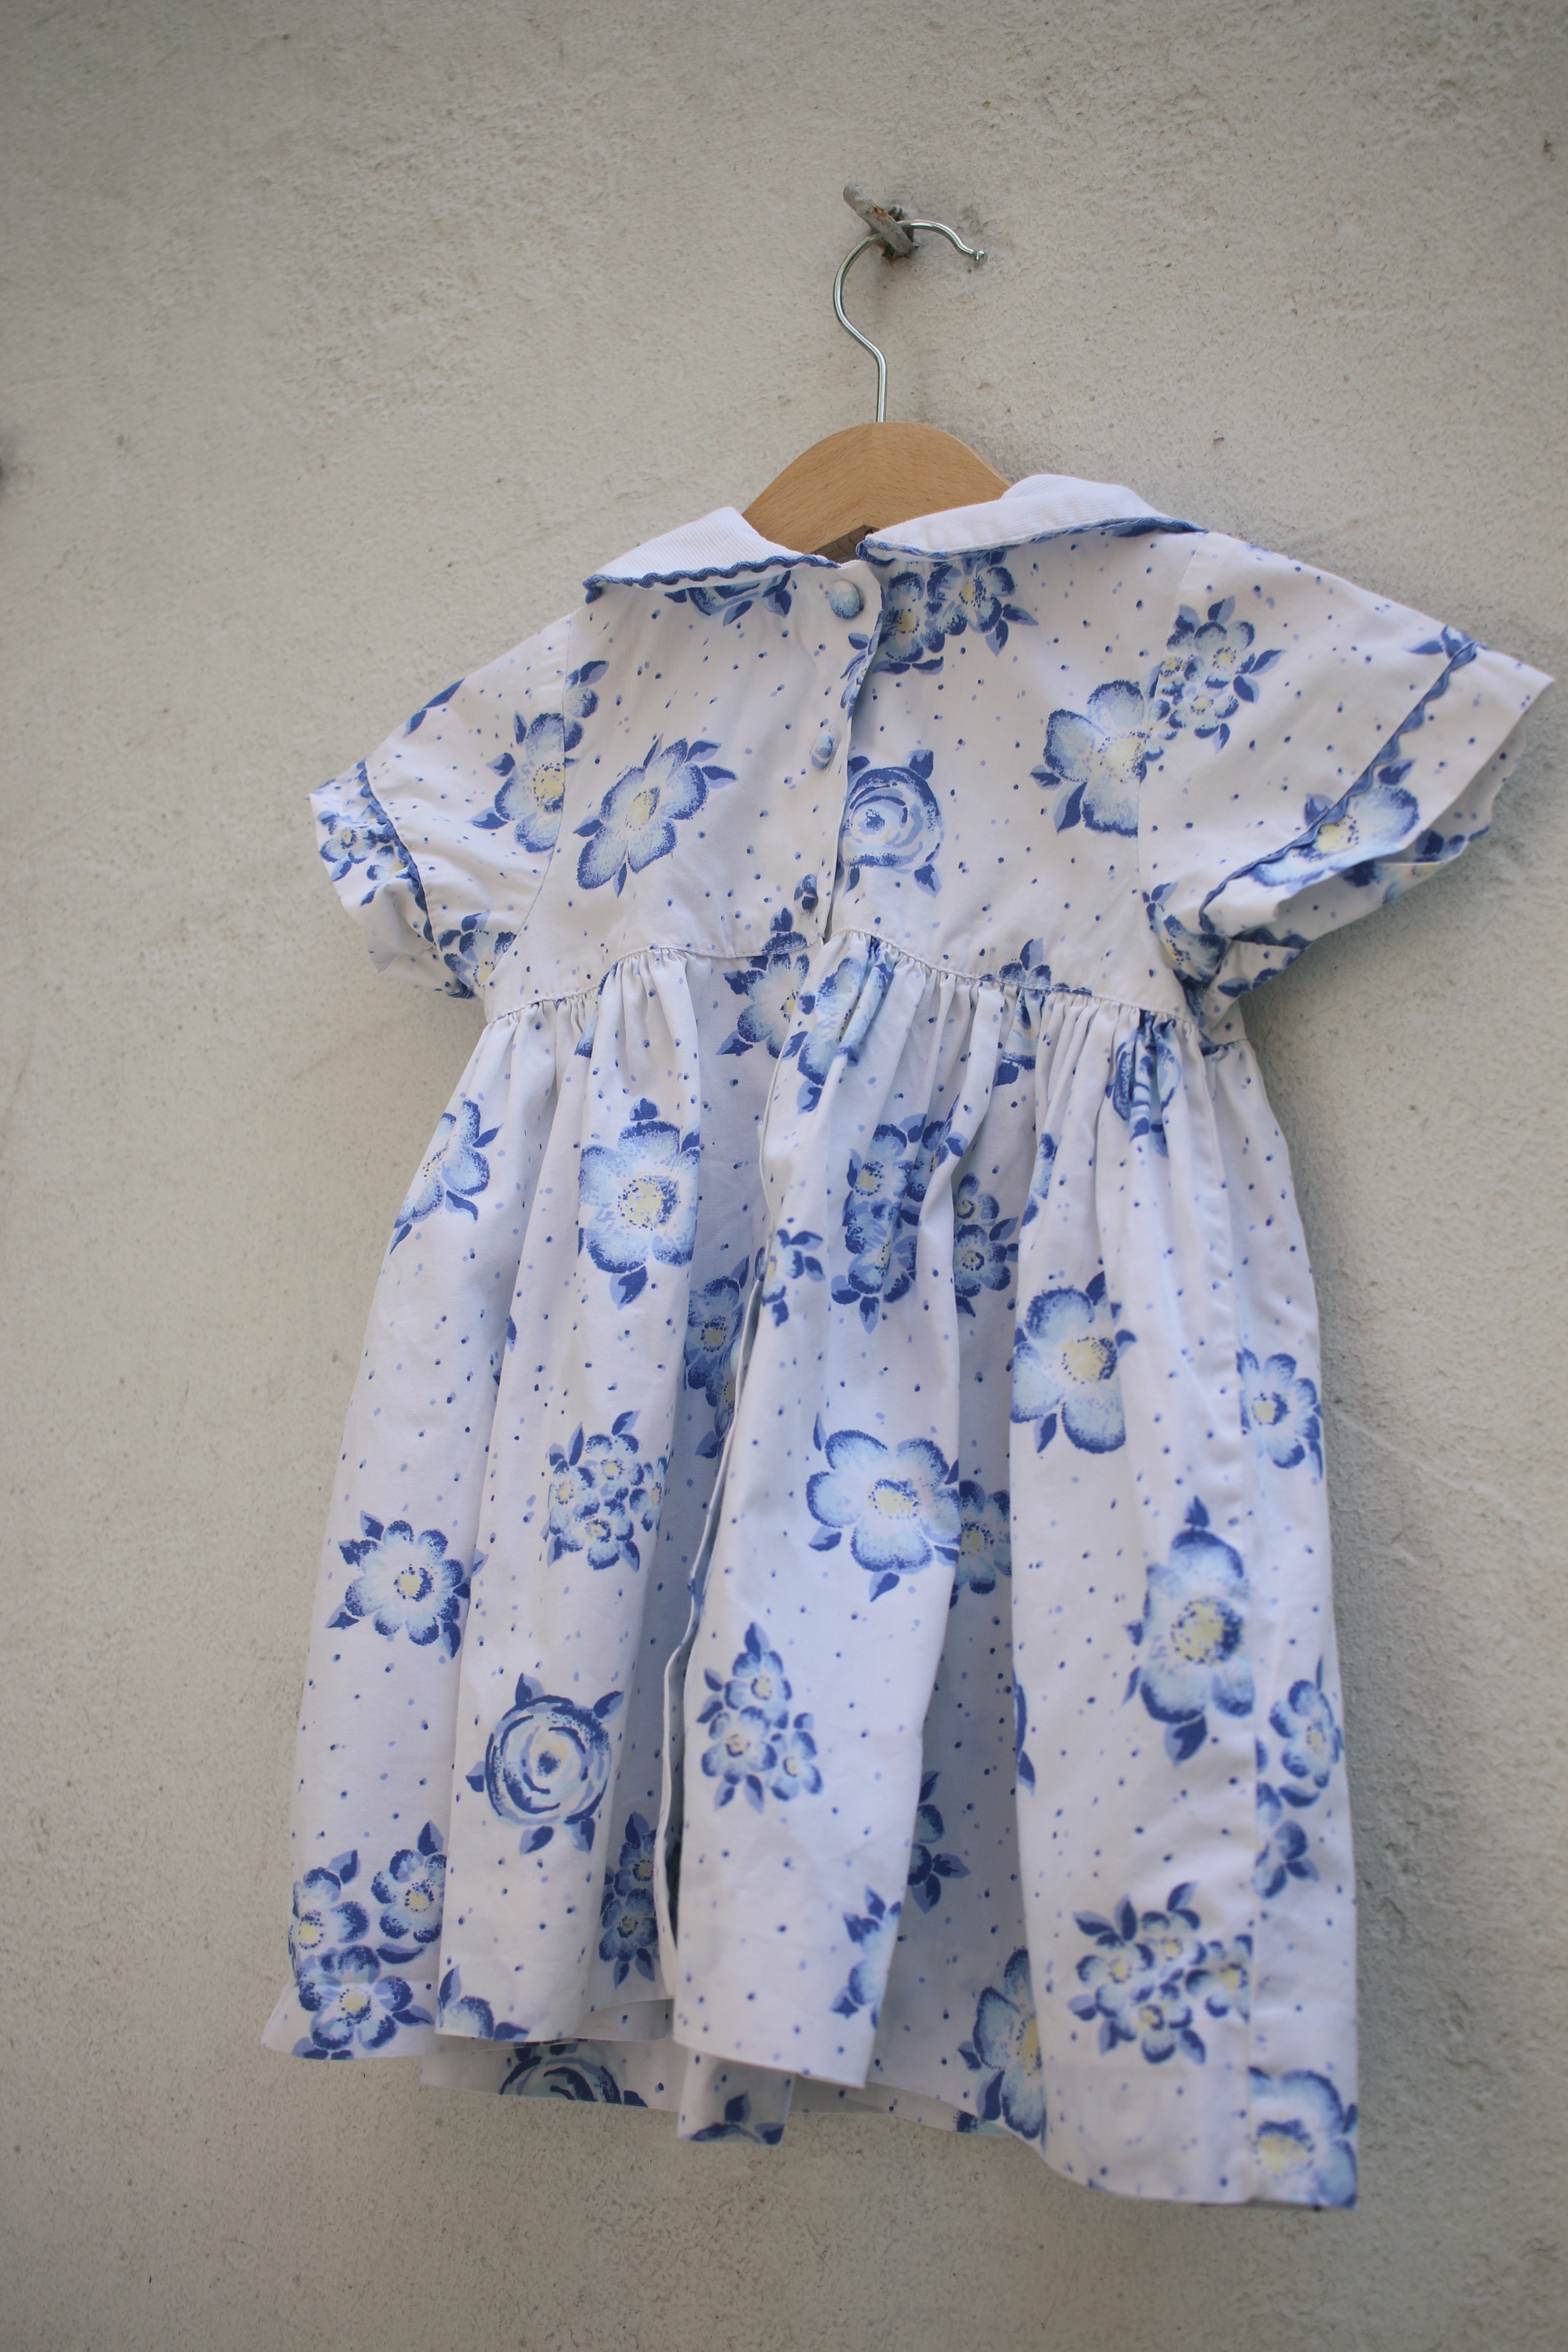 Vintage French blue floral sailor dress - size 12 months